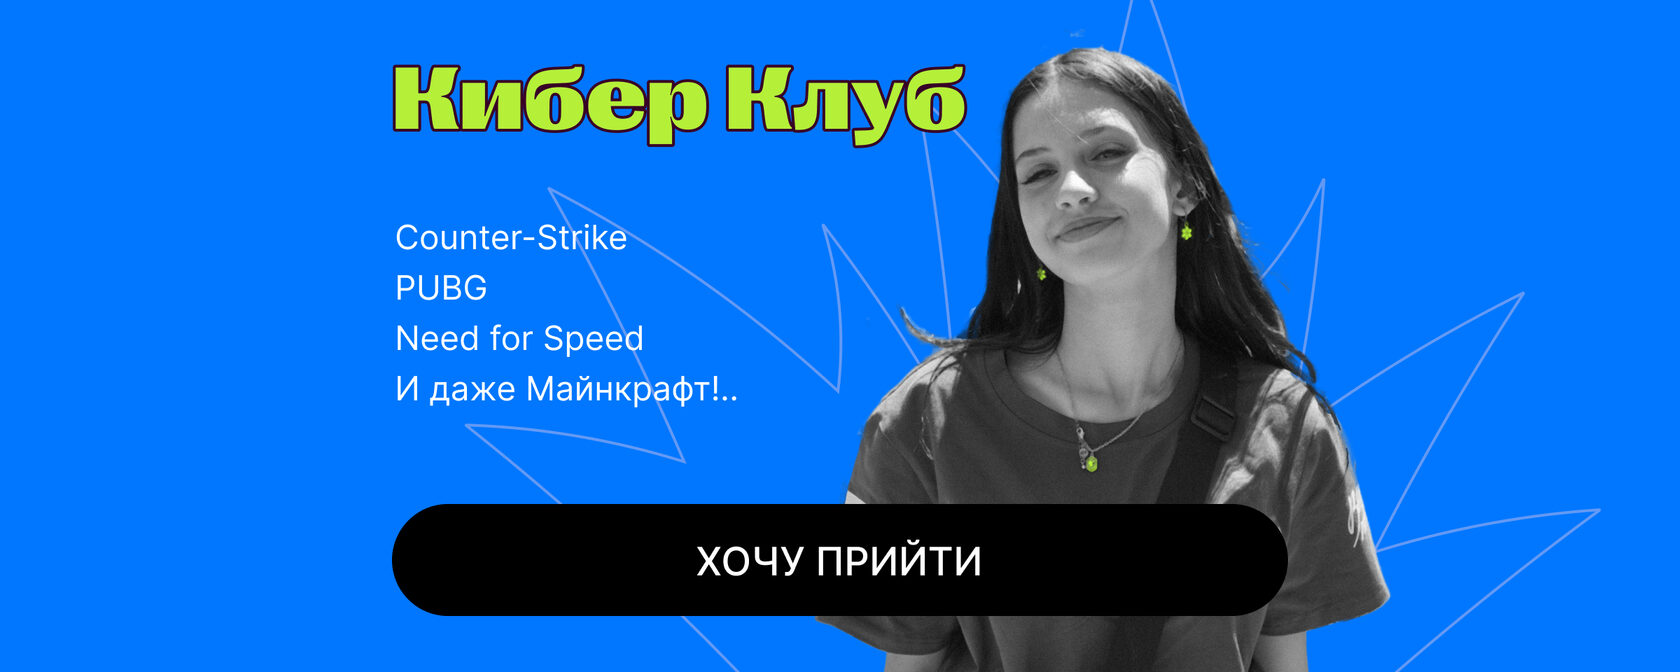 Кибер клуб в Херсонской области для молодёжи. Counter-Strike PUBG Need for Spead И даже Майнкрафт!..